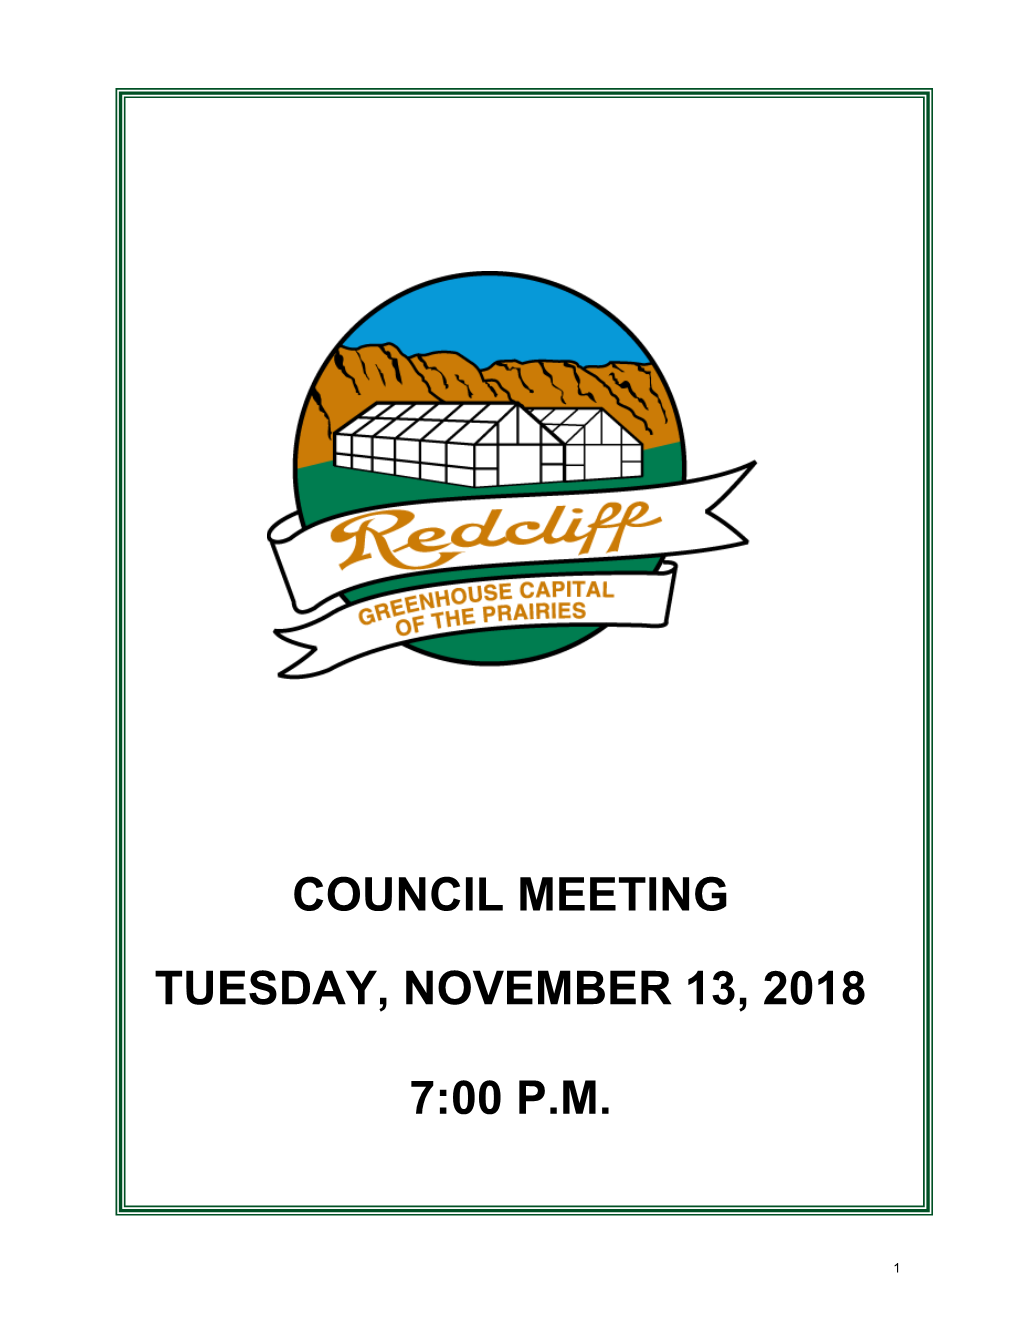 Council Meeting Tuesday, November 13, 2018 7:00 P.M